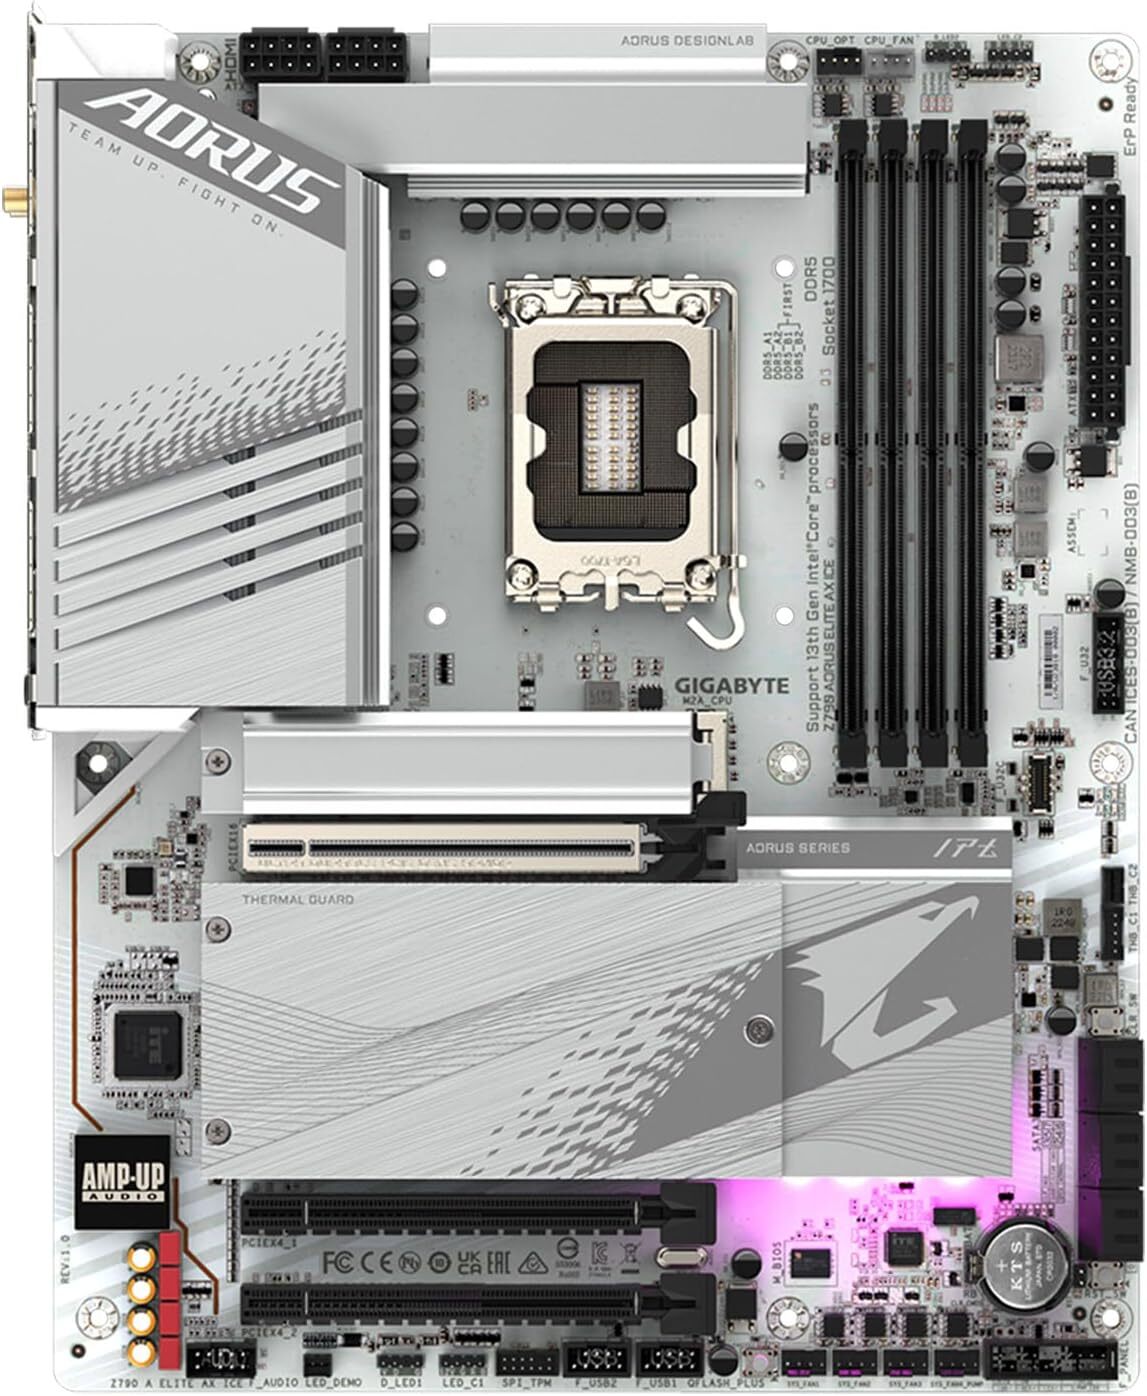 GIGABYTE Z790 AORUS ELITE AX ICE / ATX LGA1700 DDR5 7600